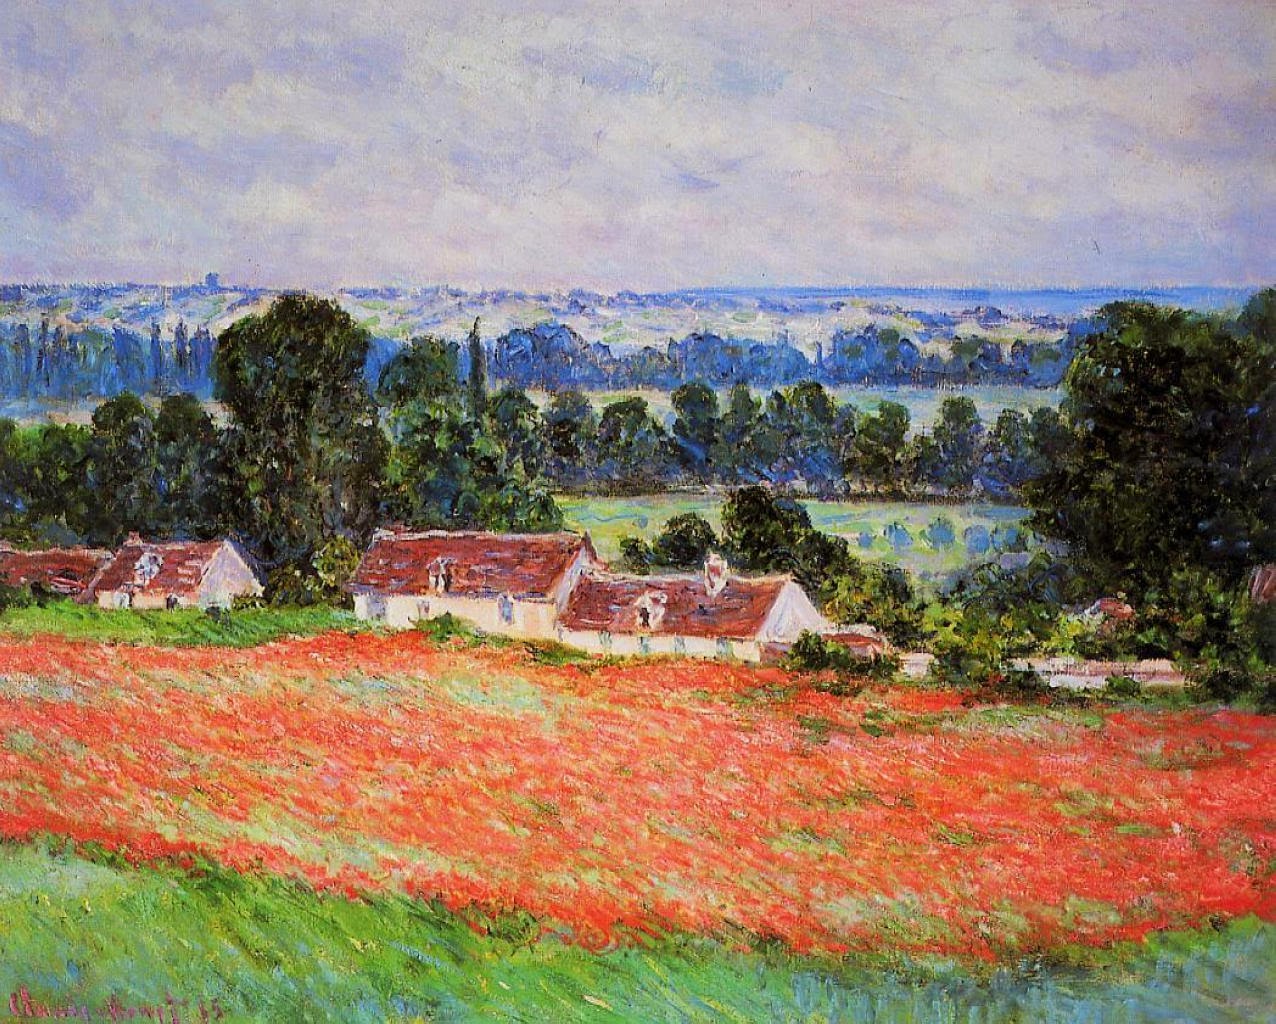 Claude+Monet-1840-1926 (489).jpg